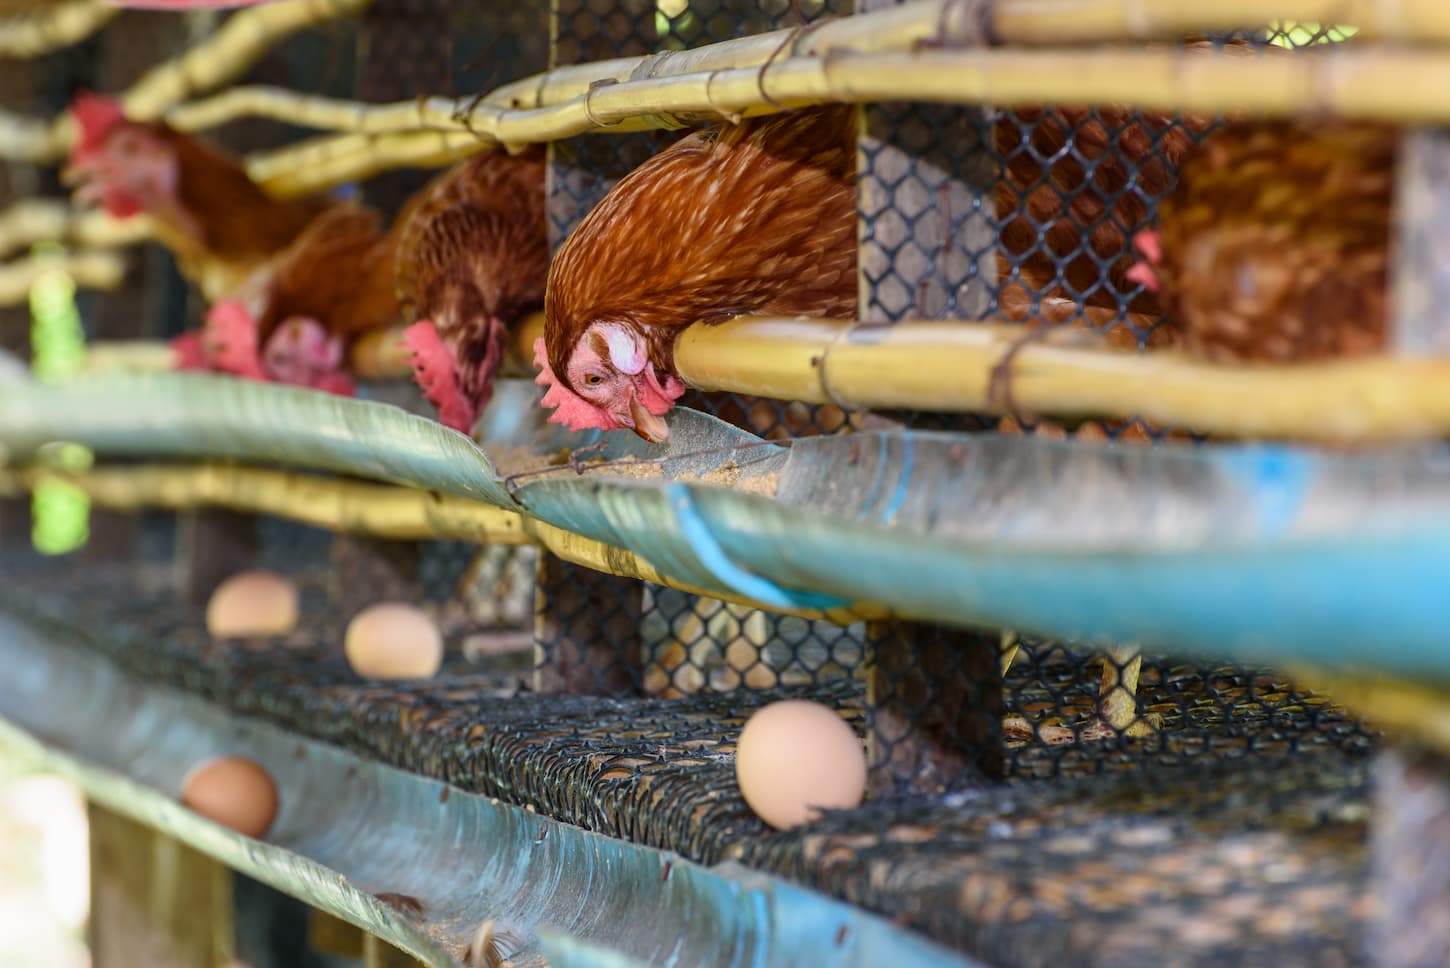 An image of an egg chicken farm in rural Thailand.